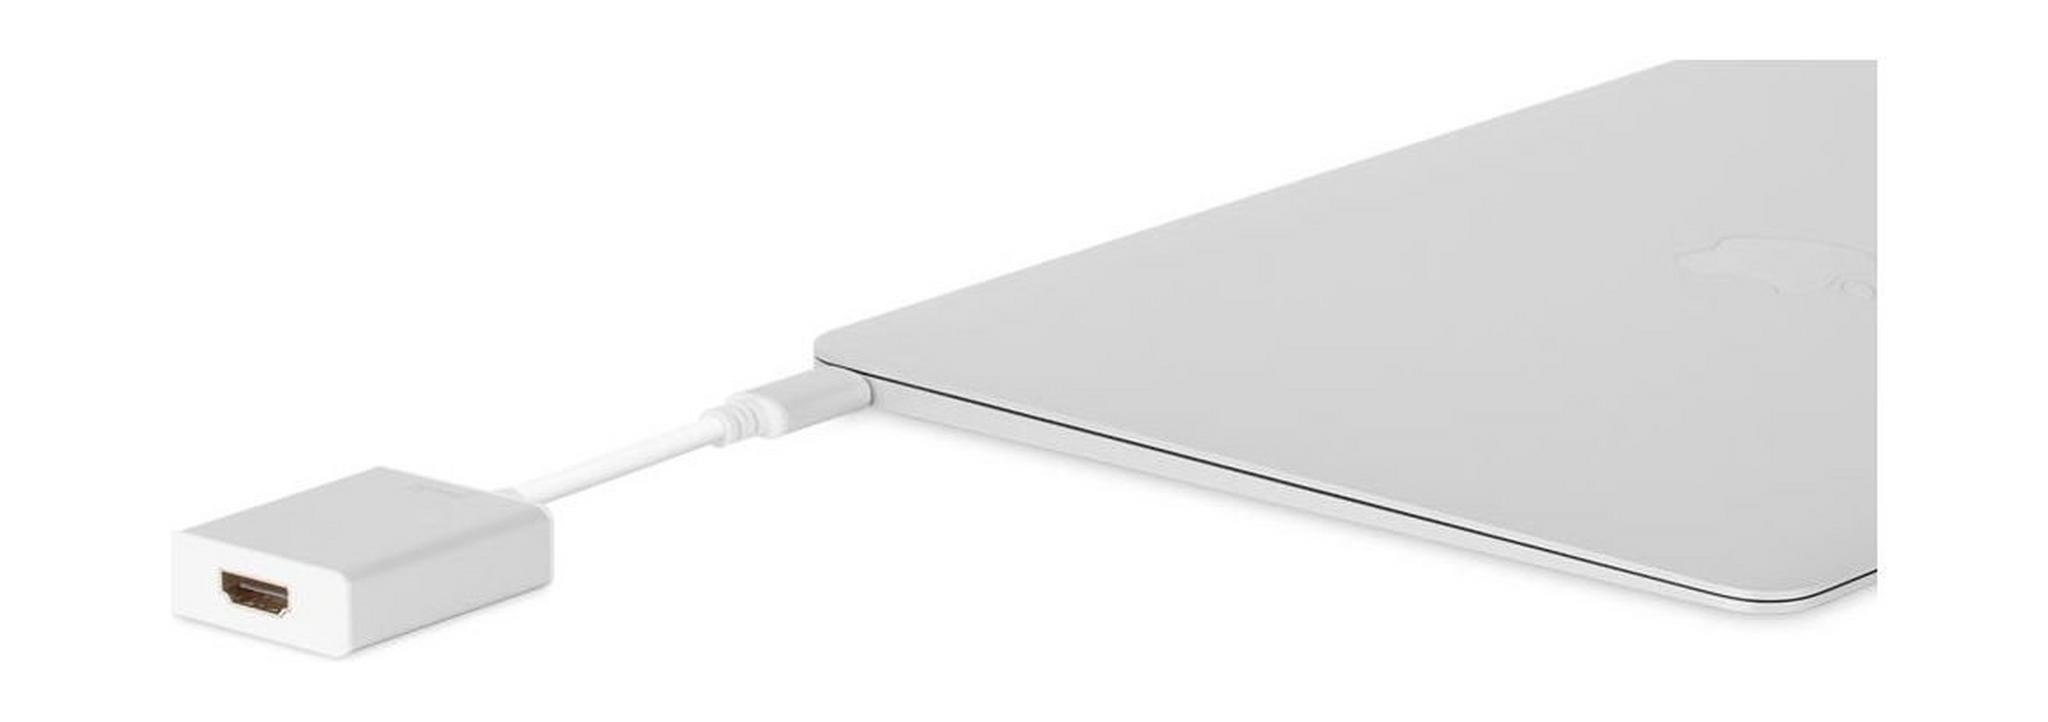 Moshi USB-C To HDMI Adapter (99MO084202) – Silver